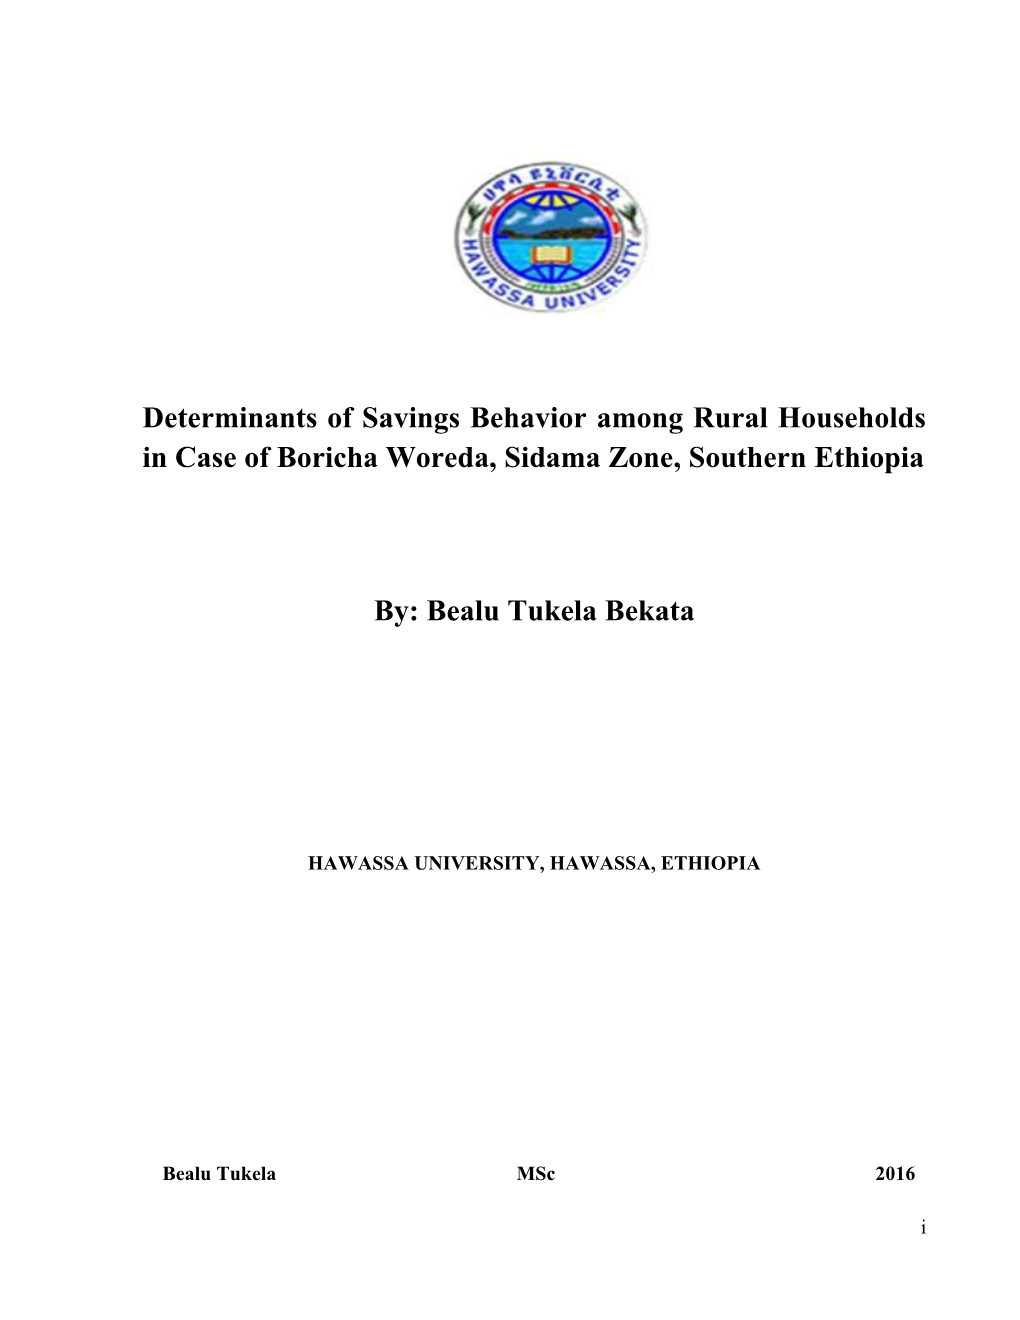 Determinants of Savings Behavior Among Rural Households in Case of Boricha Woreda, Sidama Zone, Southern Ethiopia